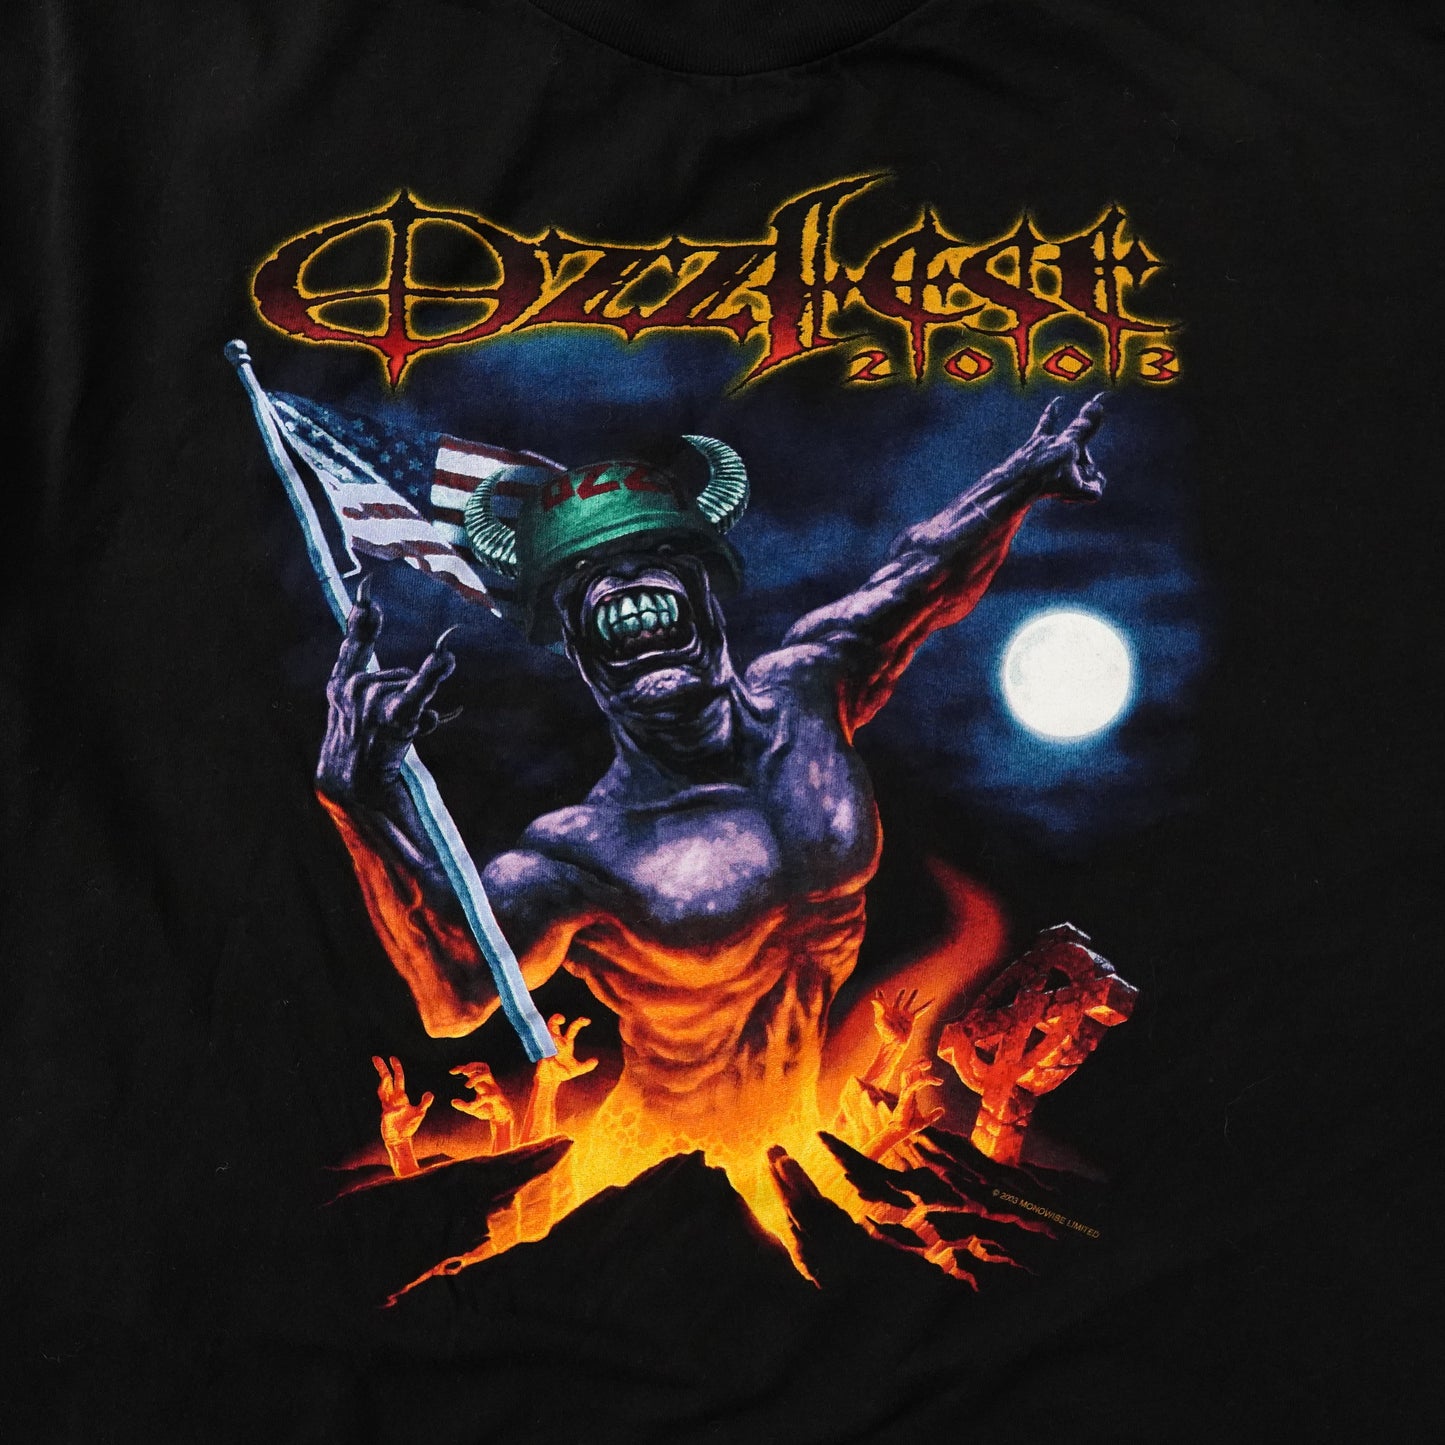 Ozzfest 2003 tee